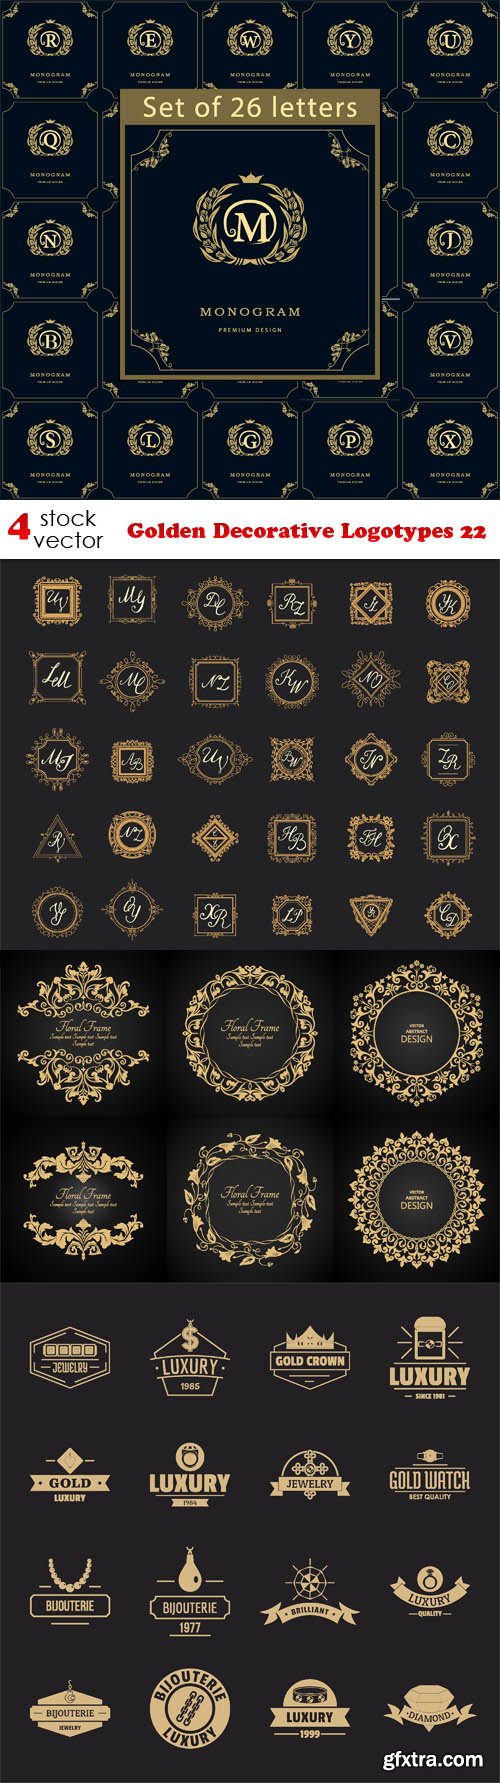 Vectors - Golden Decorative Logotypes 22